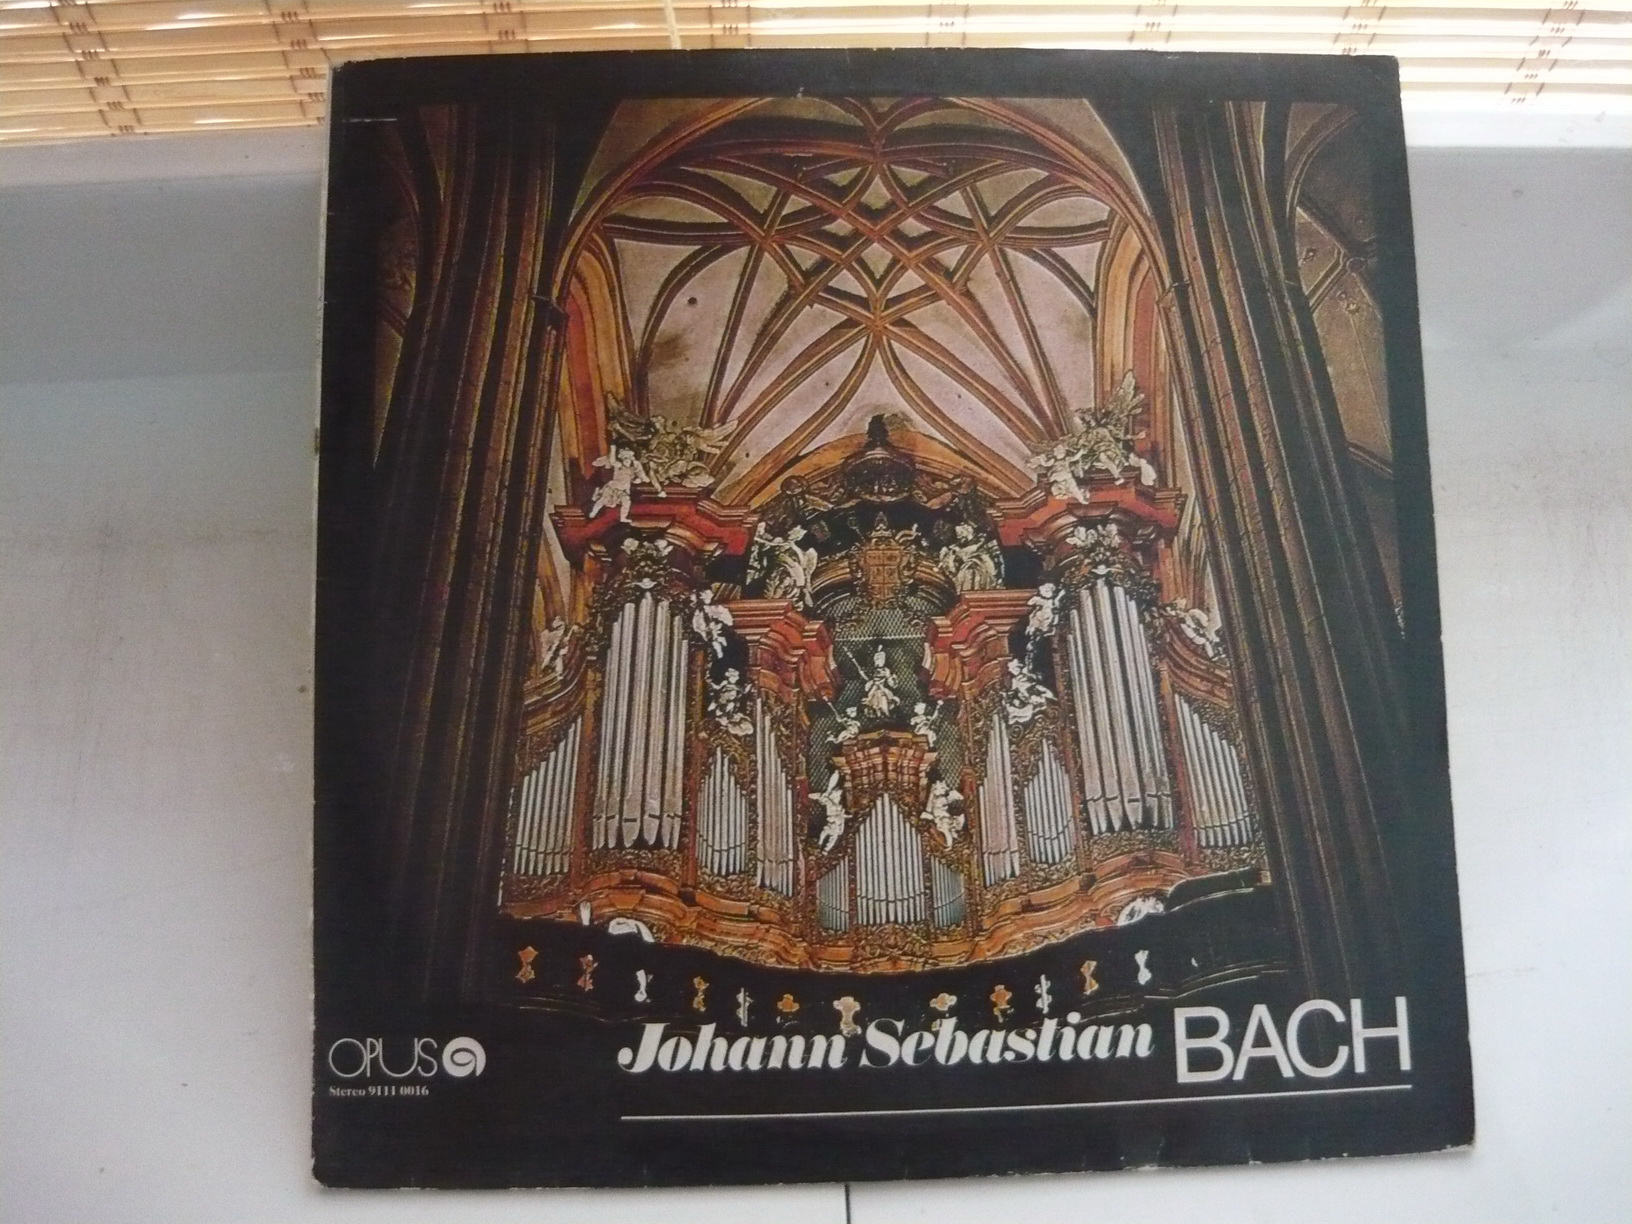 johan-sebastian-bach-johan-sebastian-bach-vinyl-cd-vinyl-online